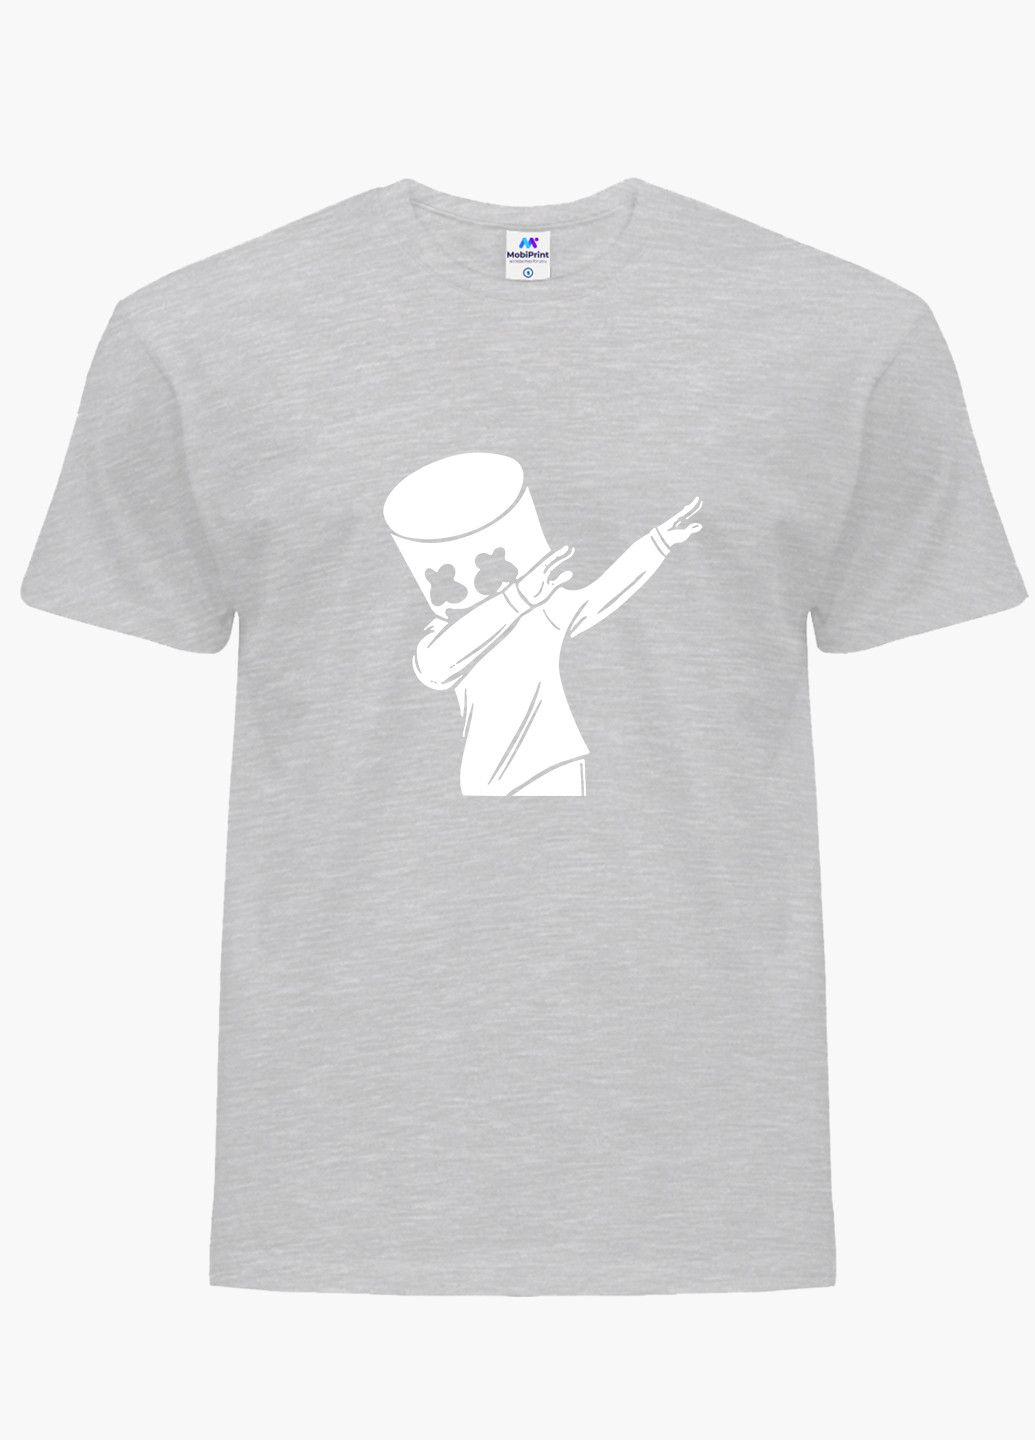 Світло-сіра демісезонна футболка дитяча маршмелло фортнайт (marshmello fortnite) (9224-1330) MobiPrint